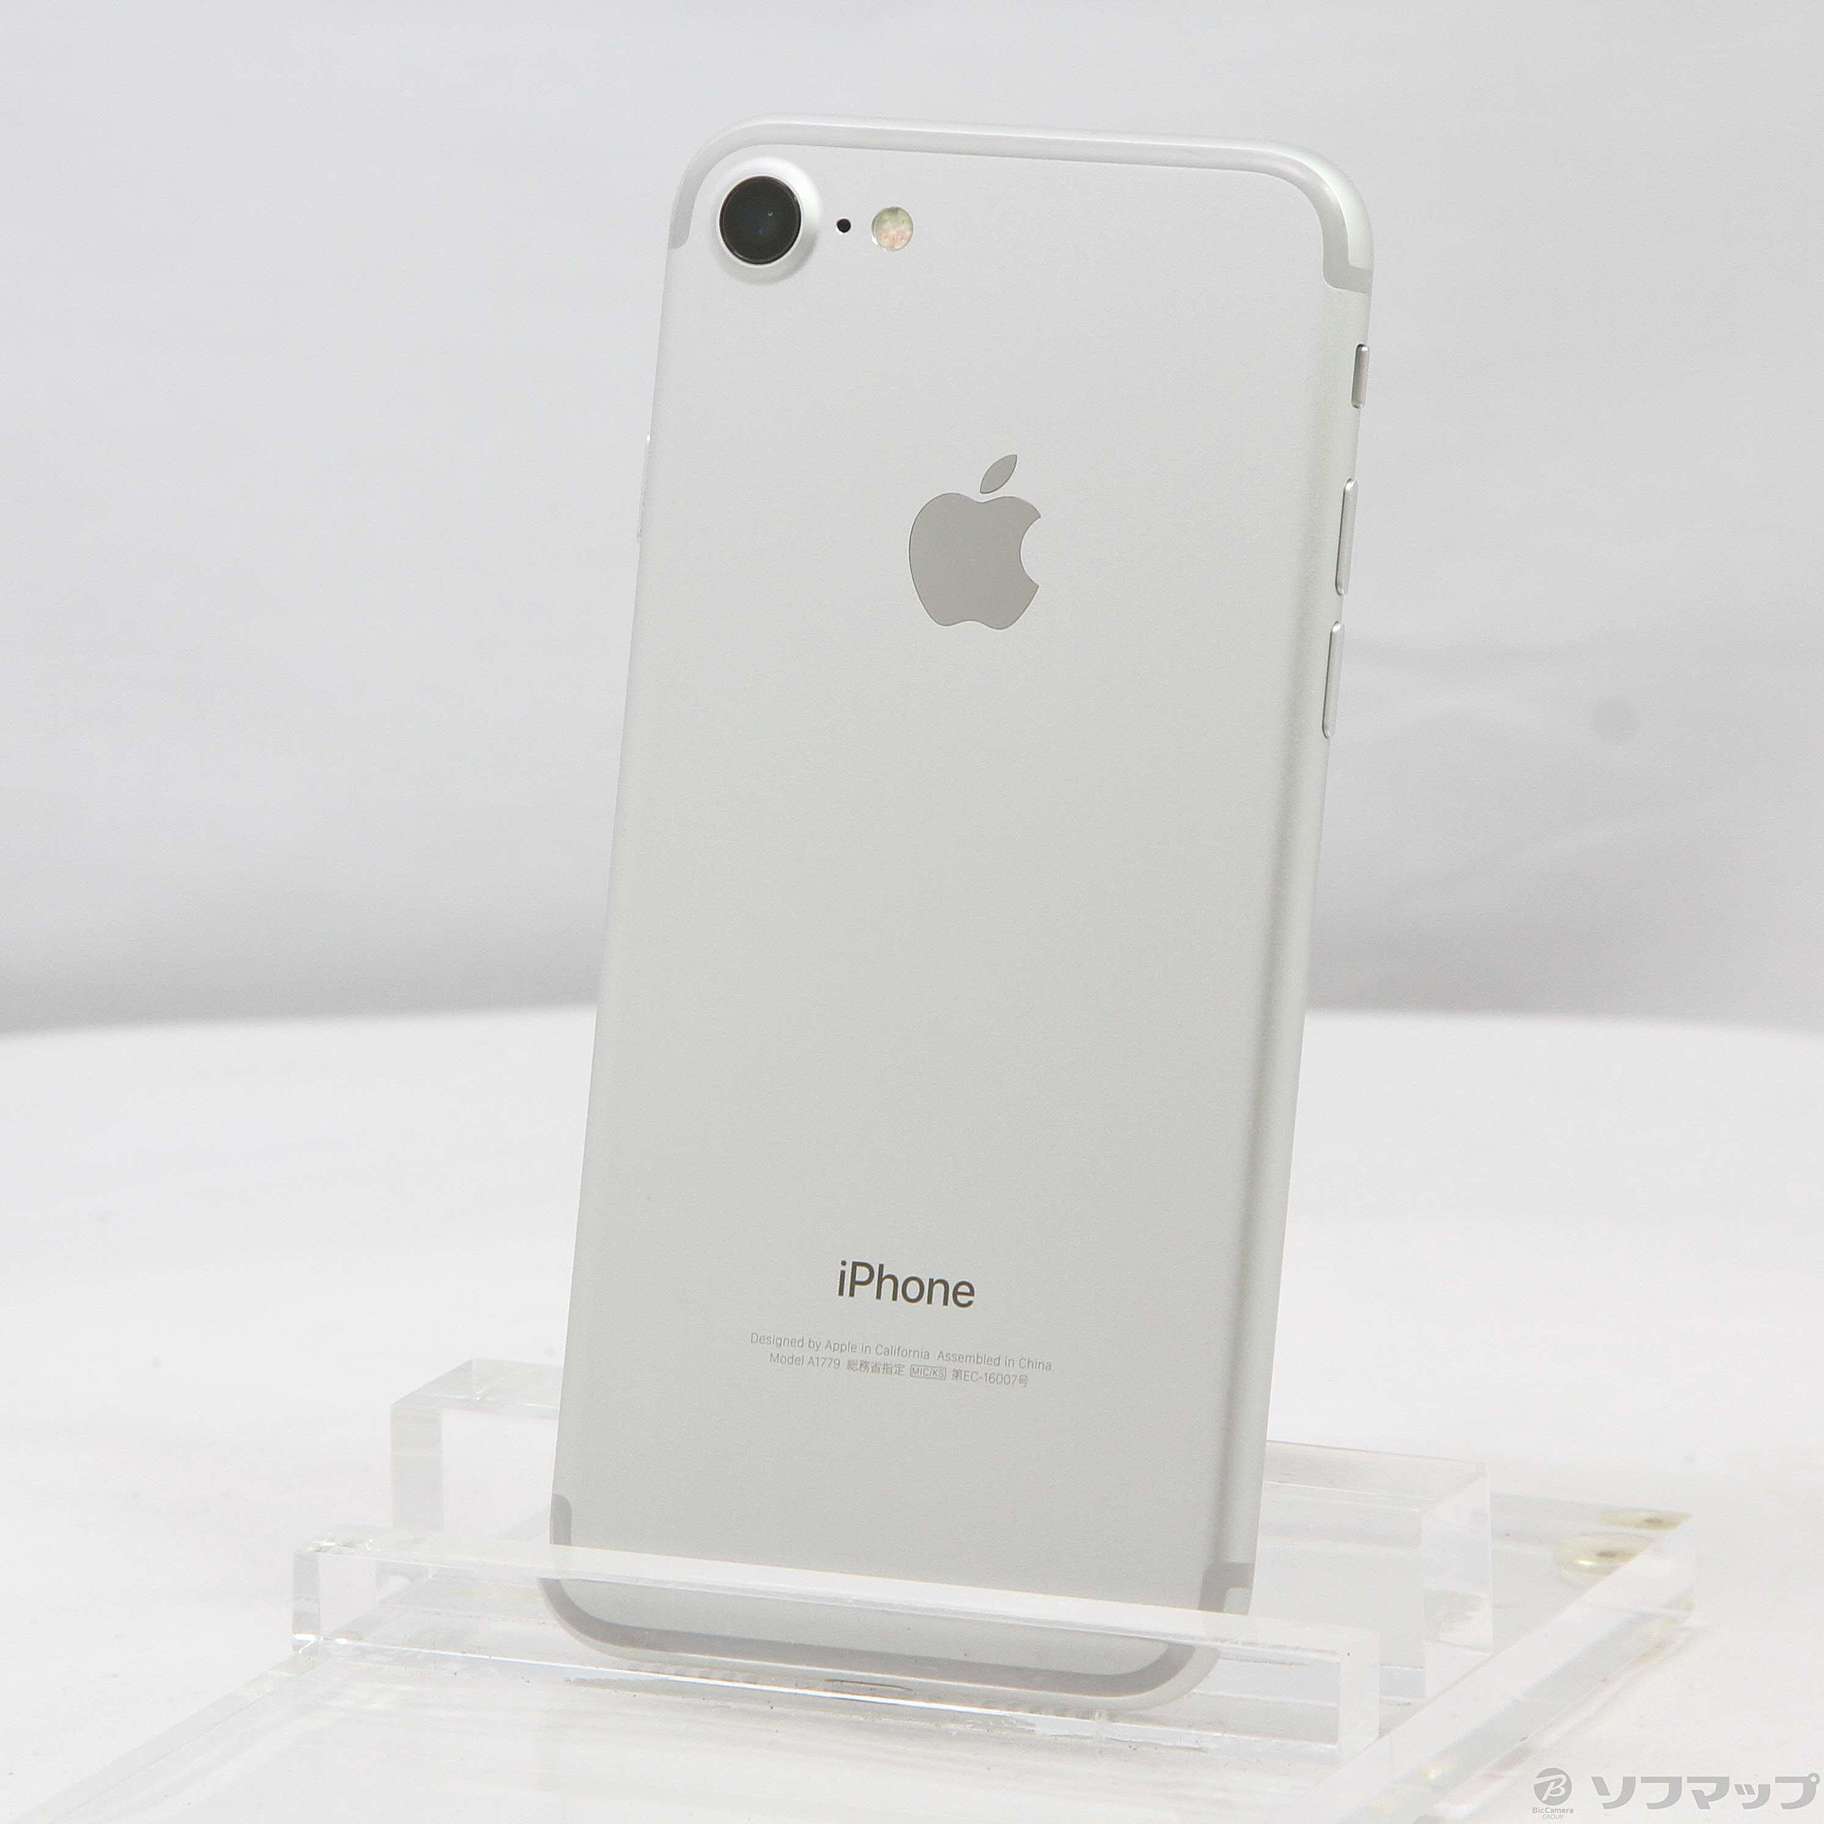 iPhone7 Silver シルバー 32GB - スマートフォン本体